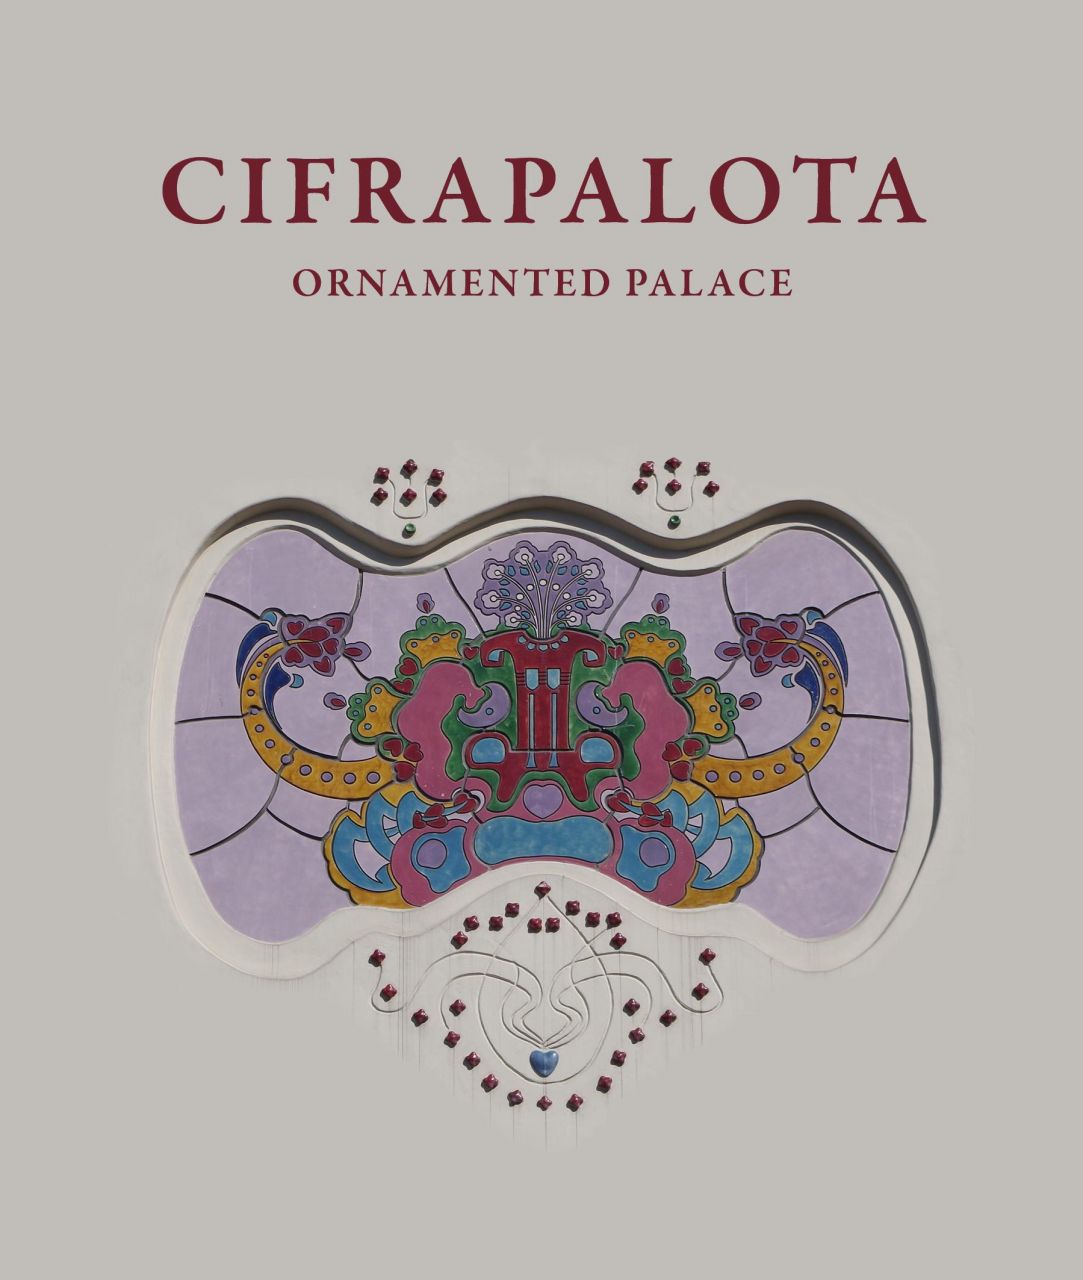 Cifrapalota - ornamented palace